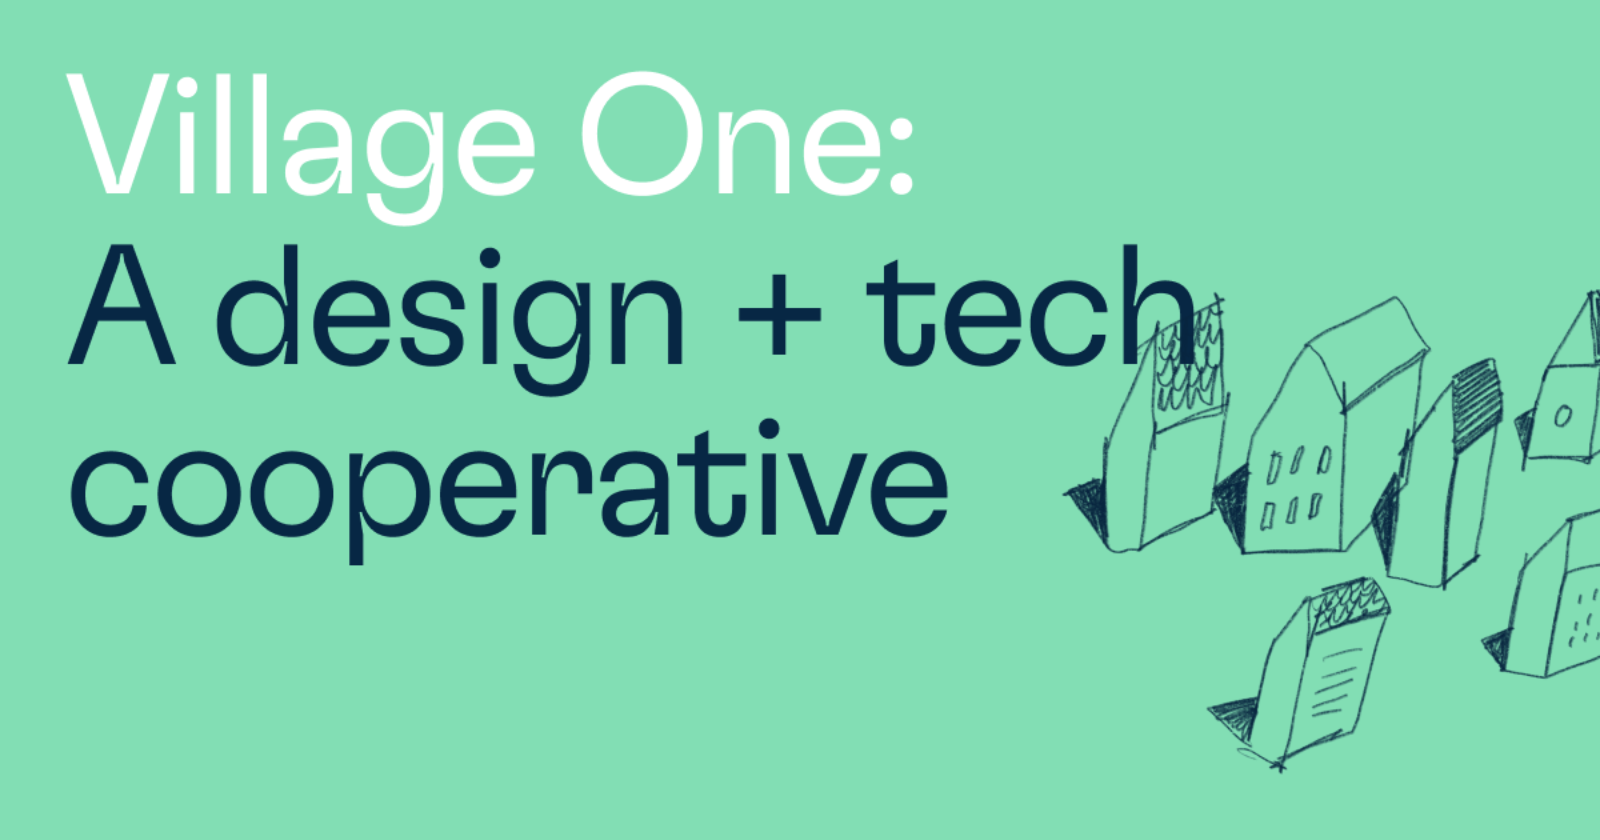 Village One: a design + tech cooperative